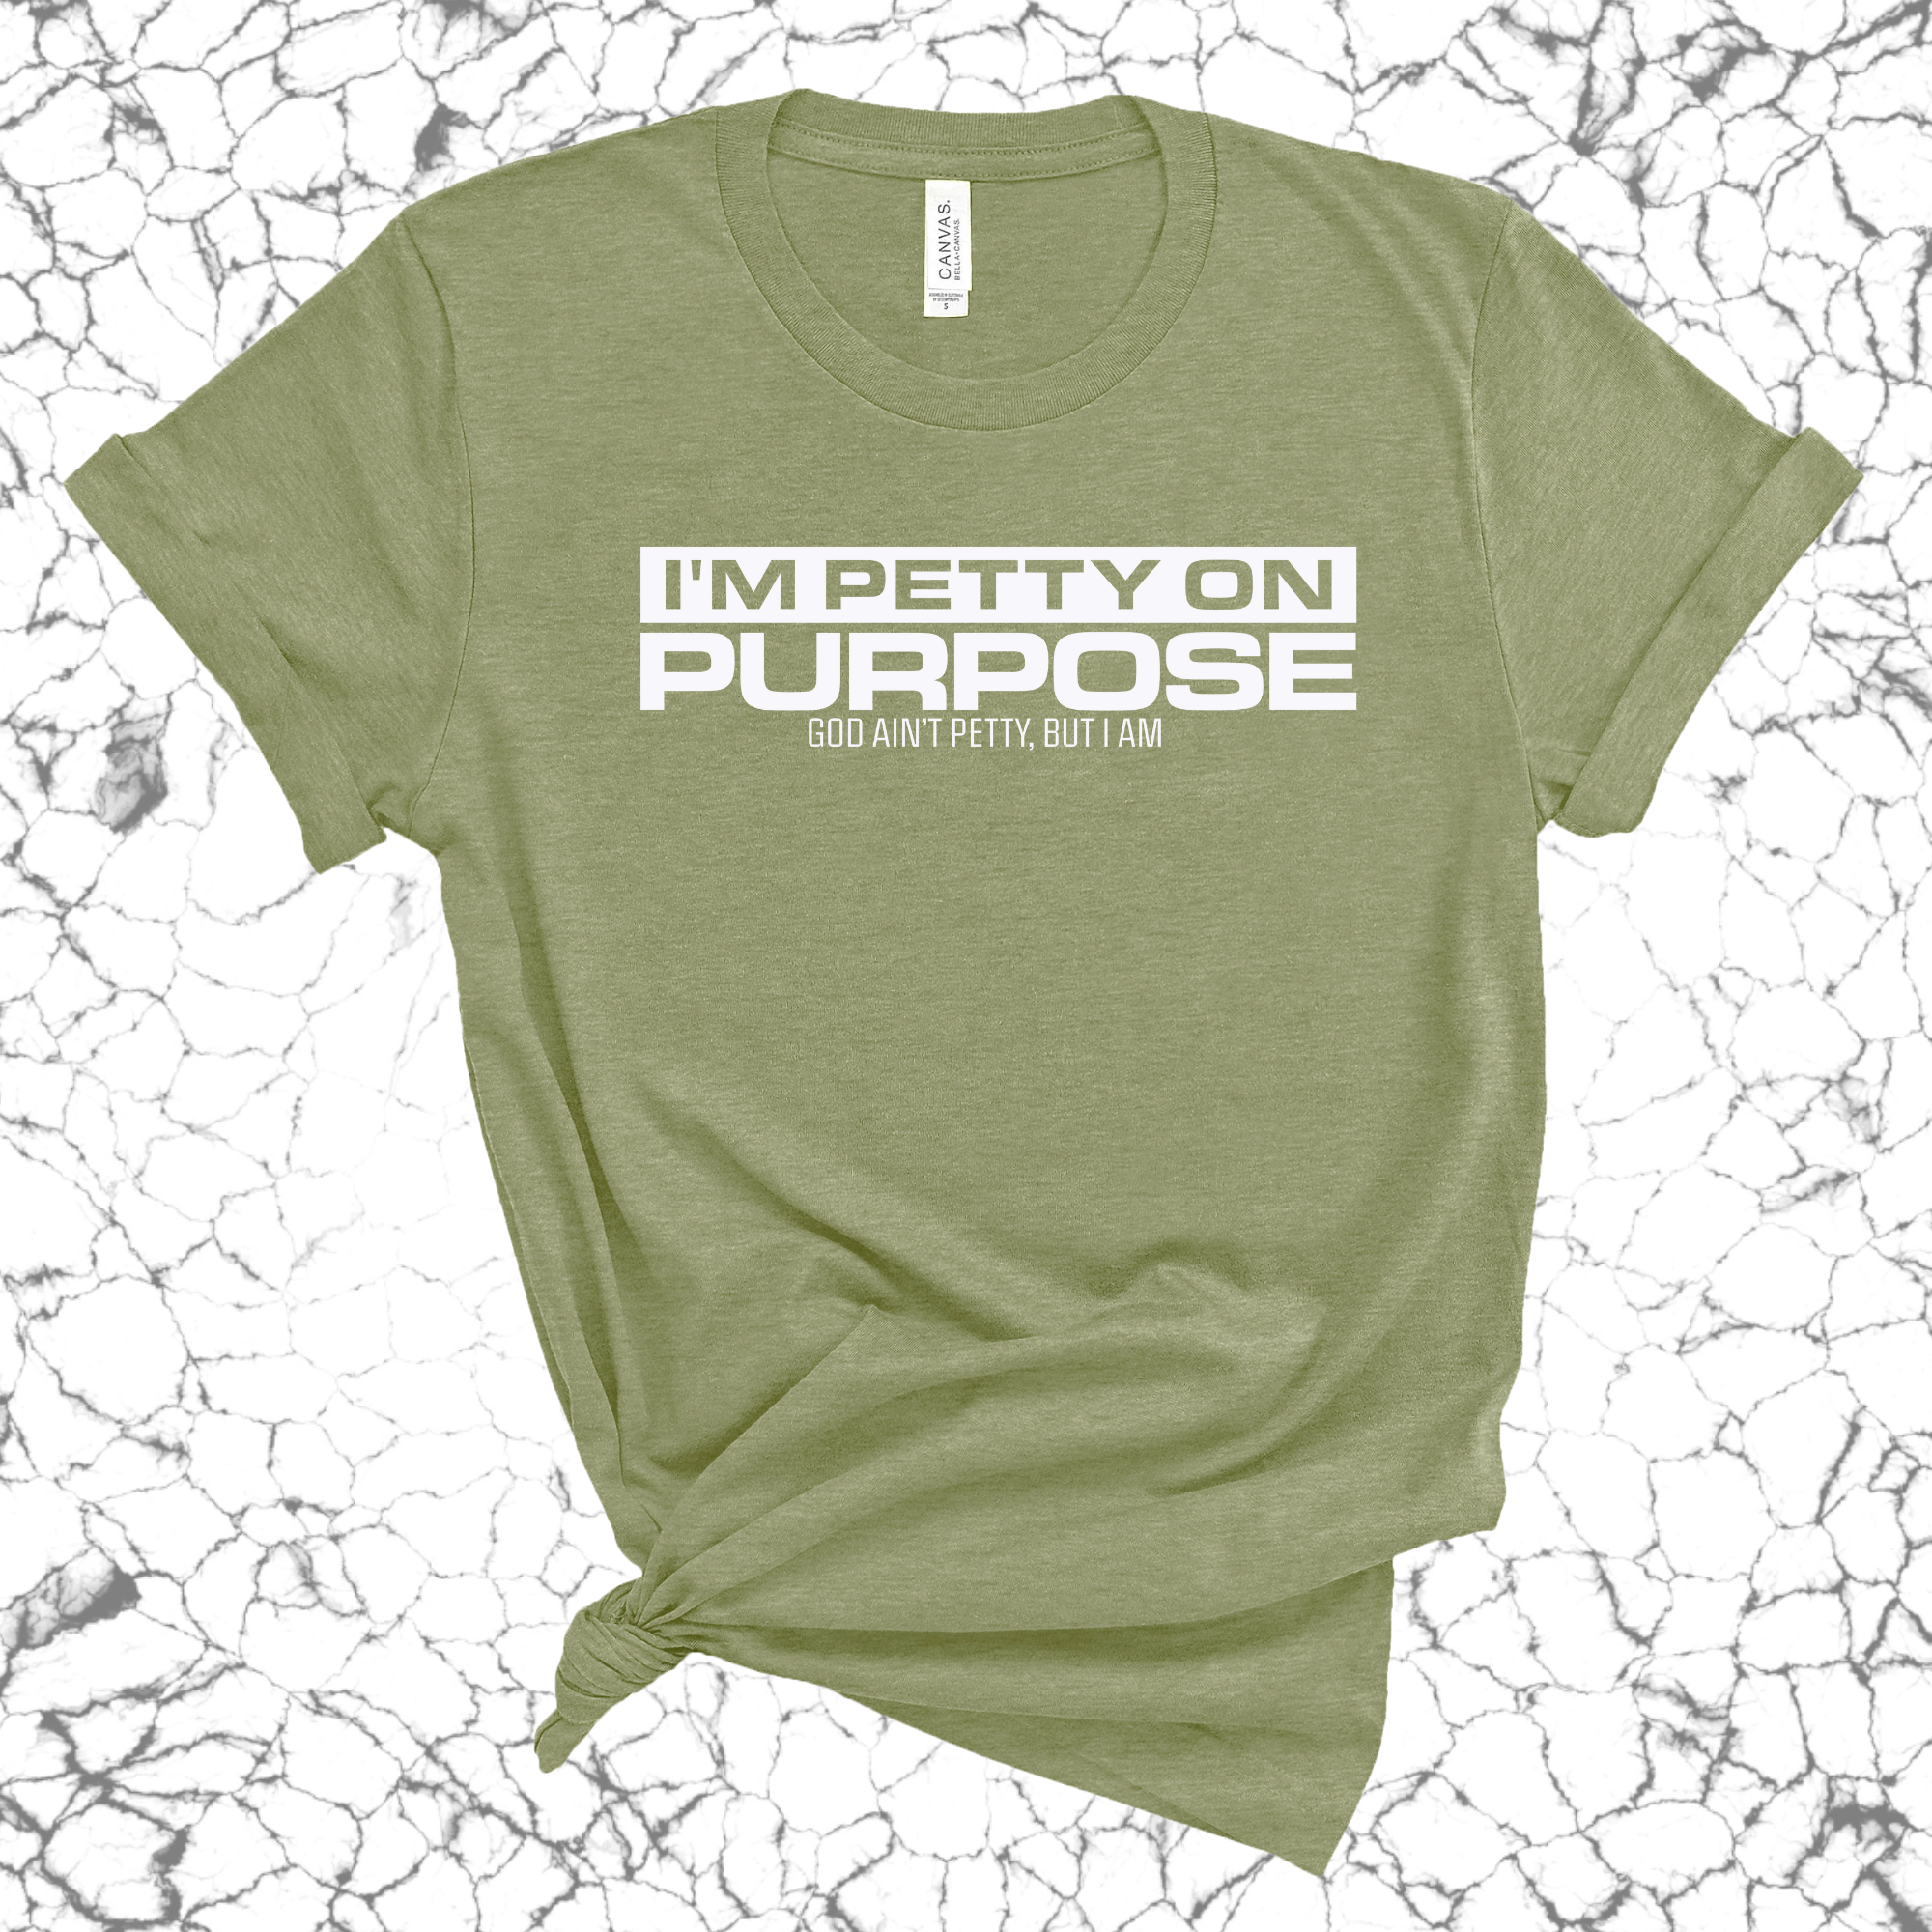 I'm Petty on Purpose Unisex Tee-T-Shirt-The Original God Ain't Petty But I Am